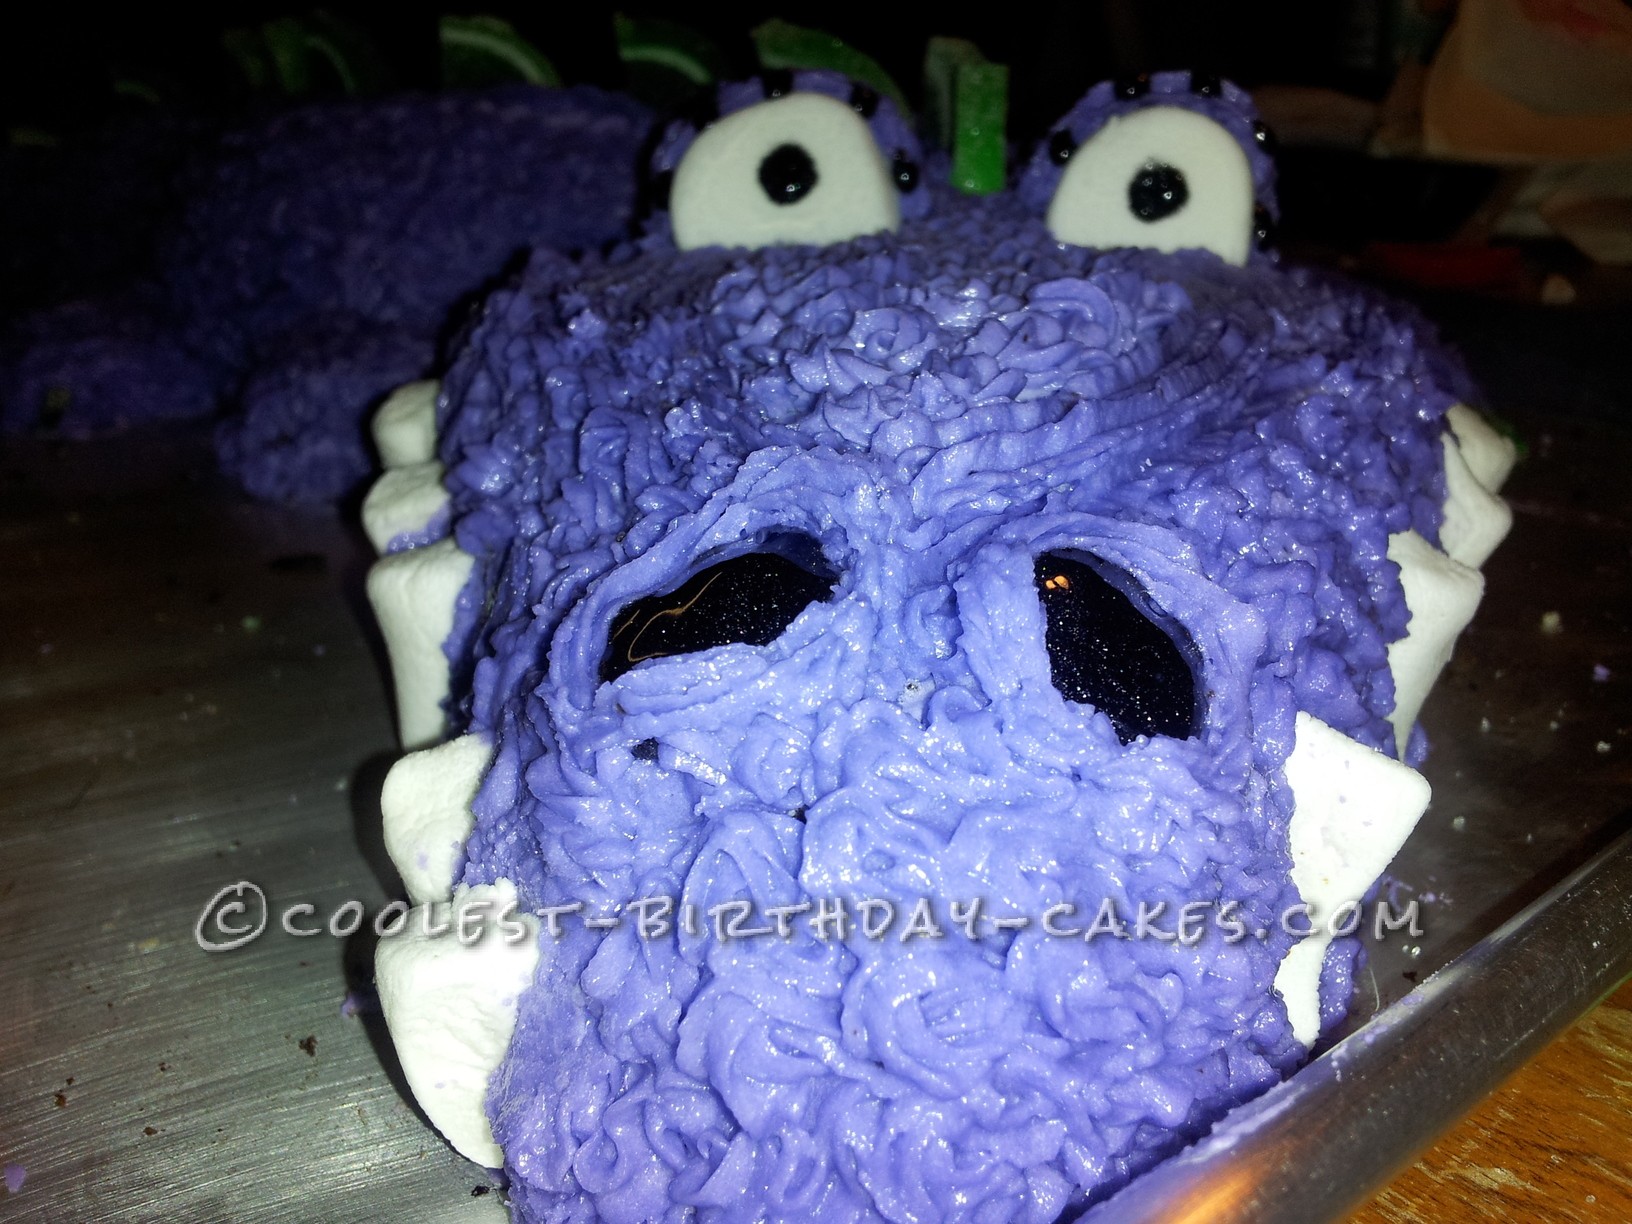 Who Wouldn't Want a Purple Escalator Cake?